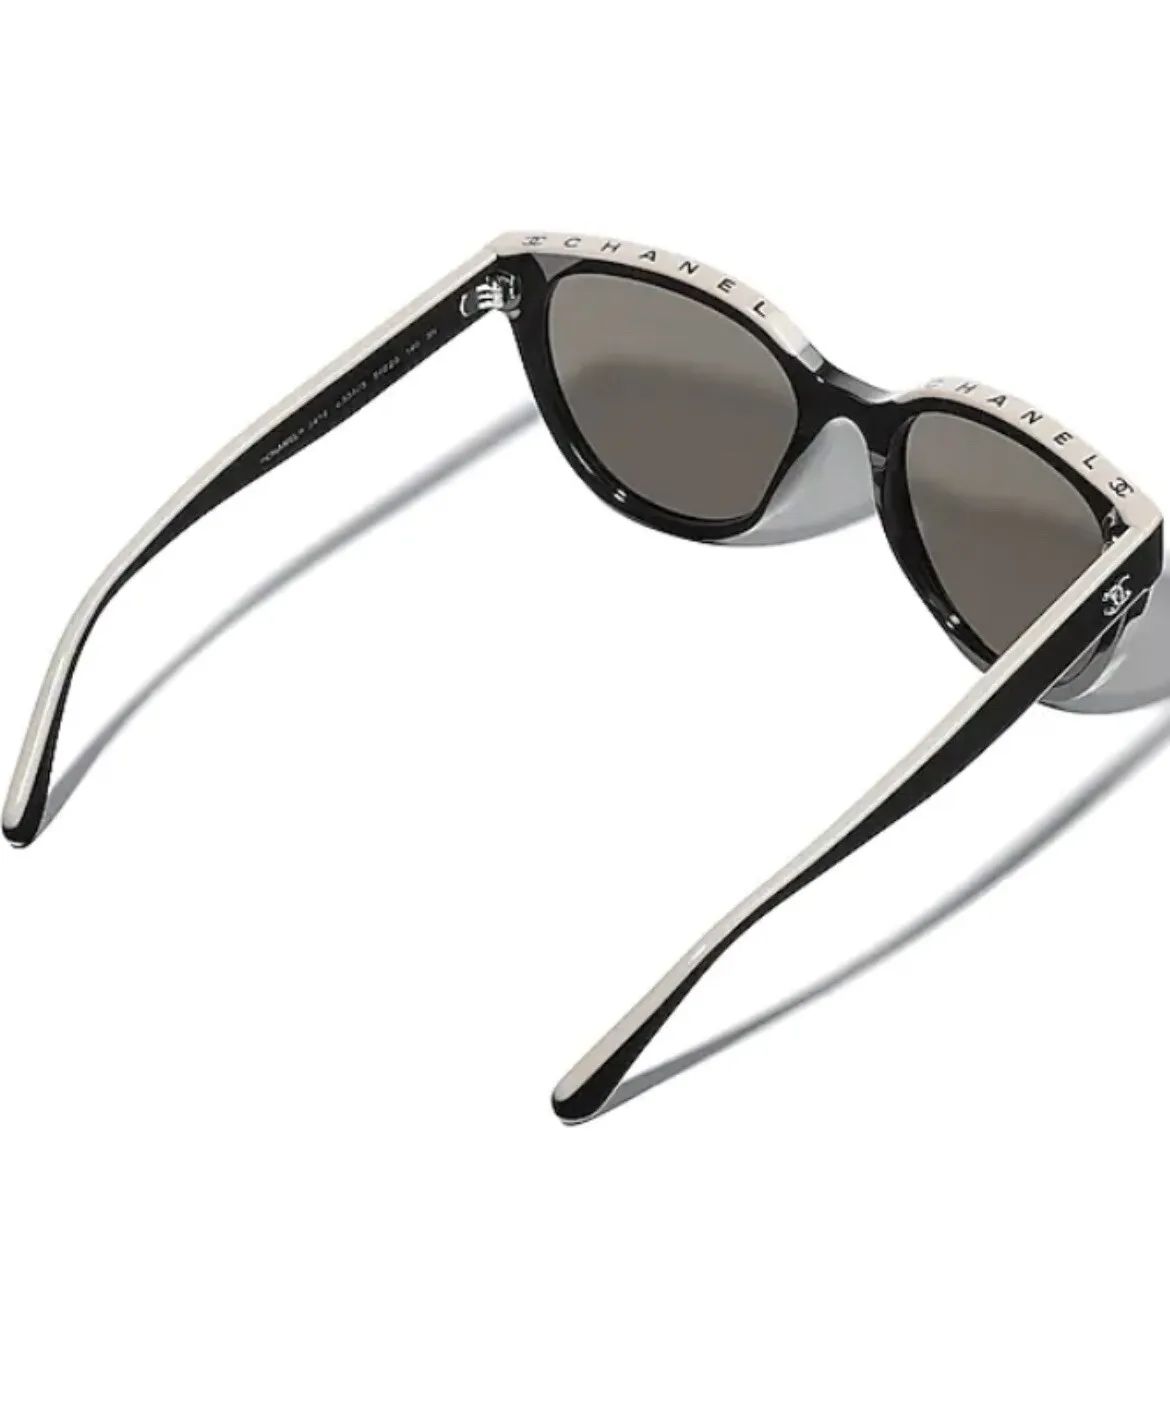 Authentic CHANEL CH5414 Women's  Butterfly Sunglasses, Black/ Beige | eBay US